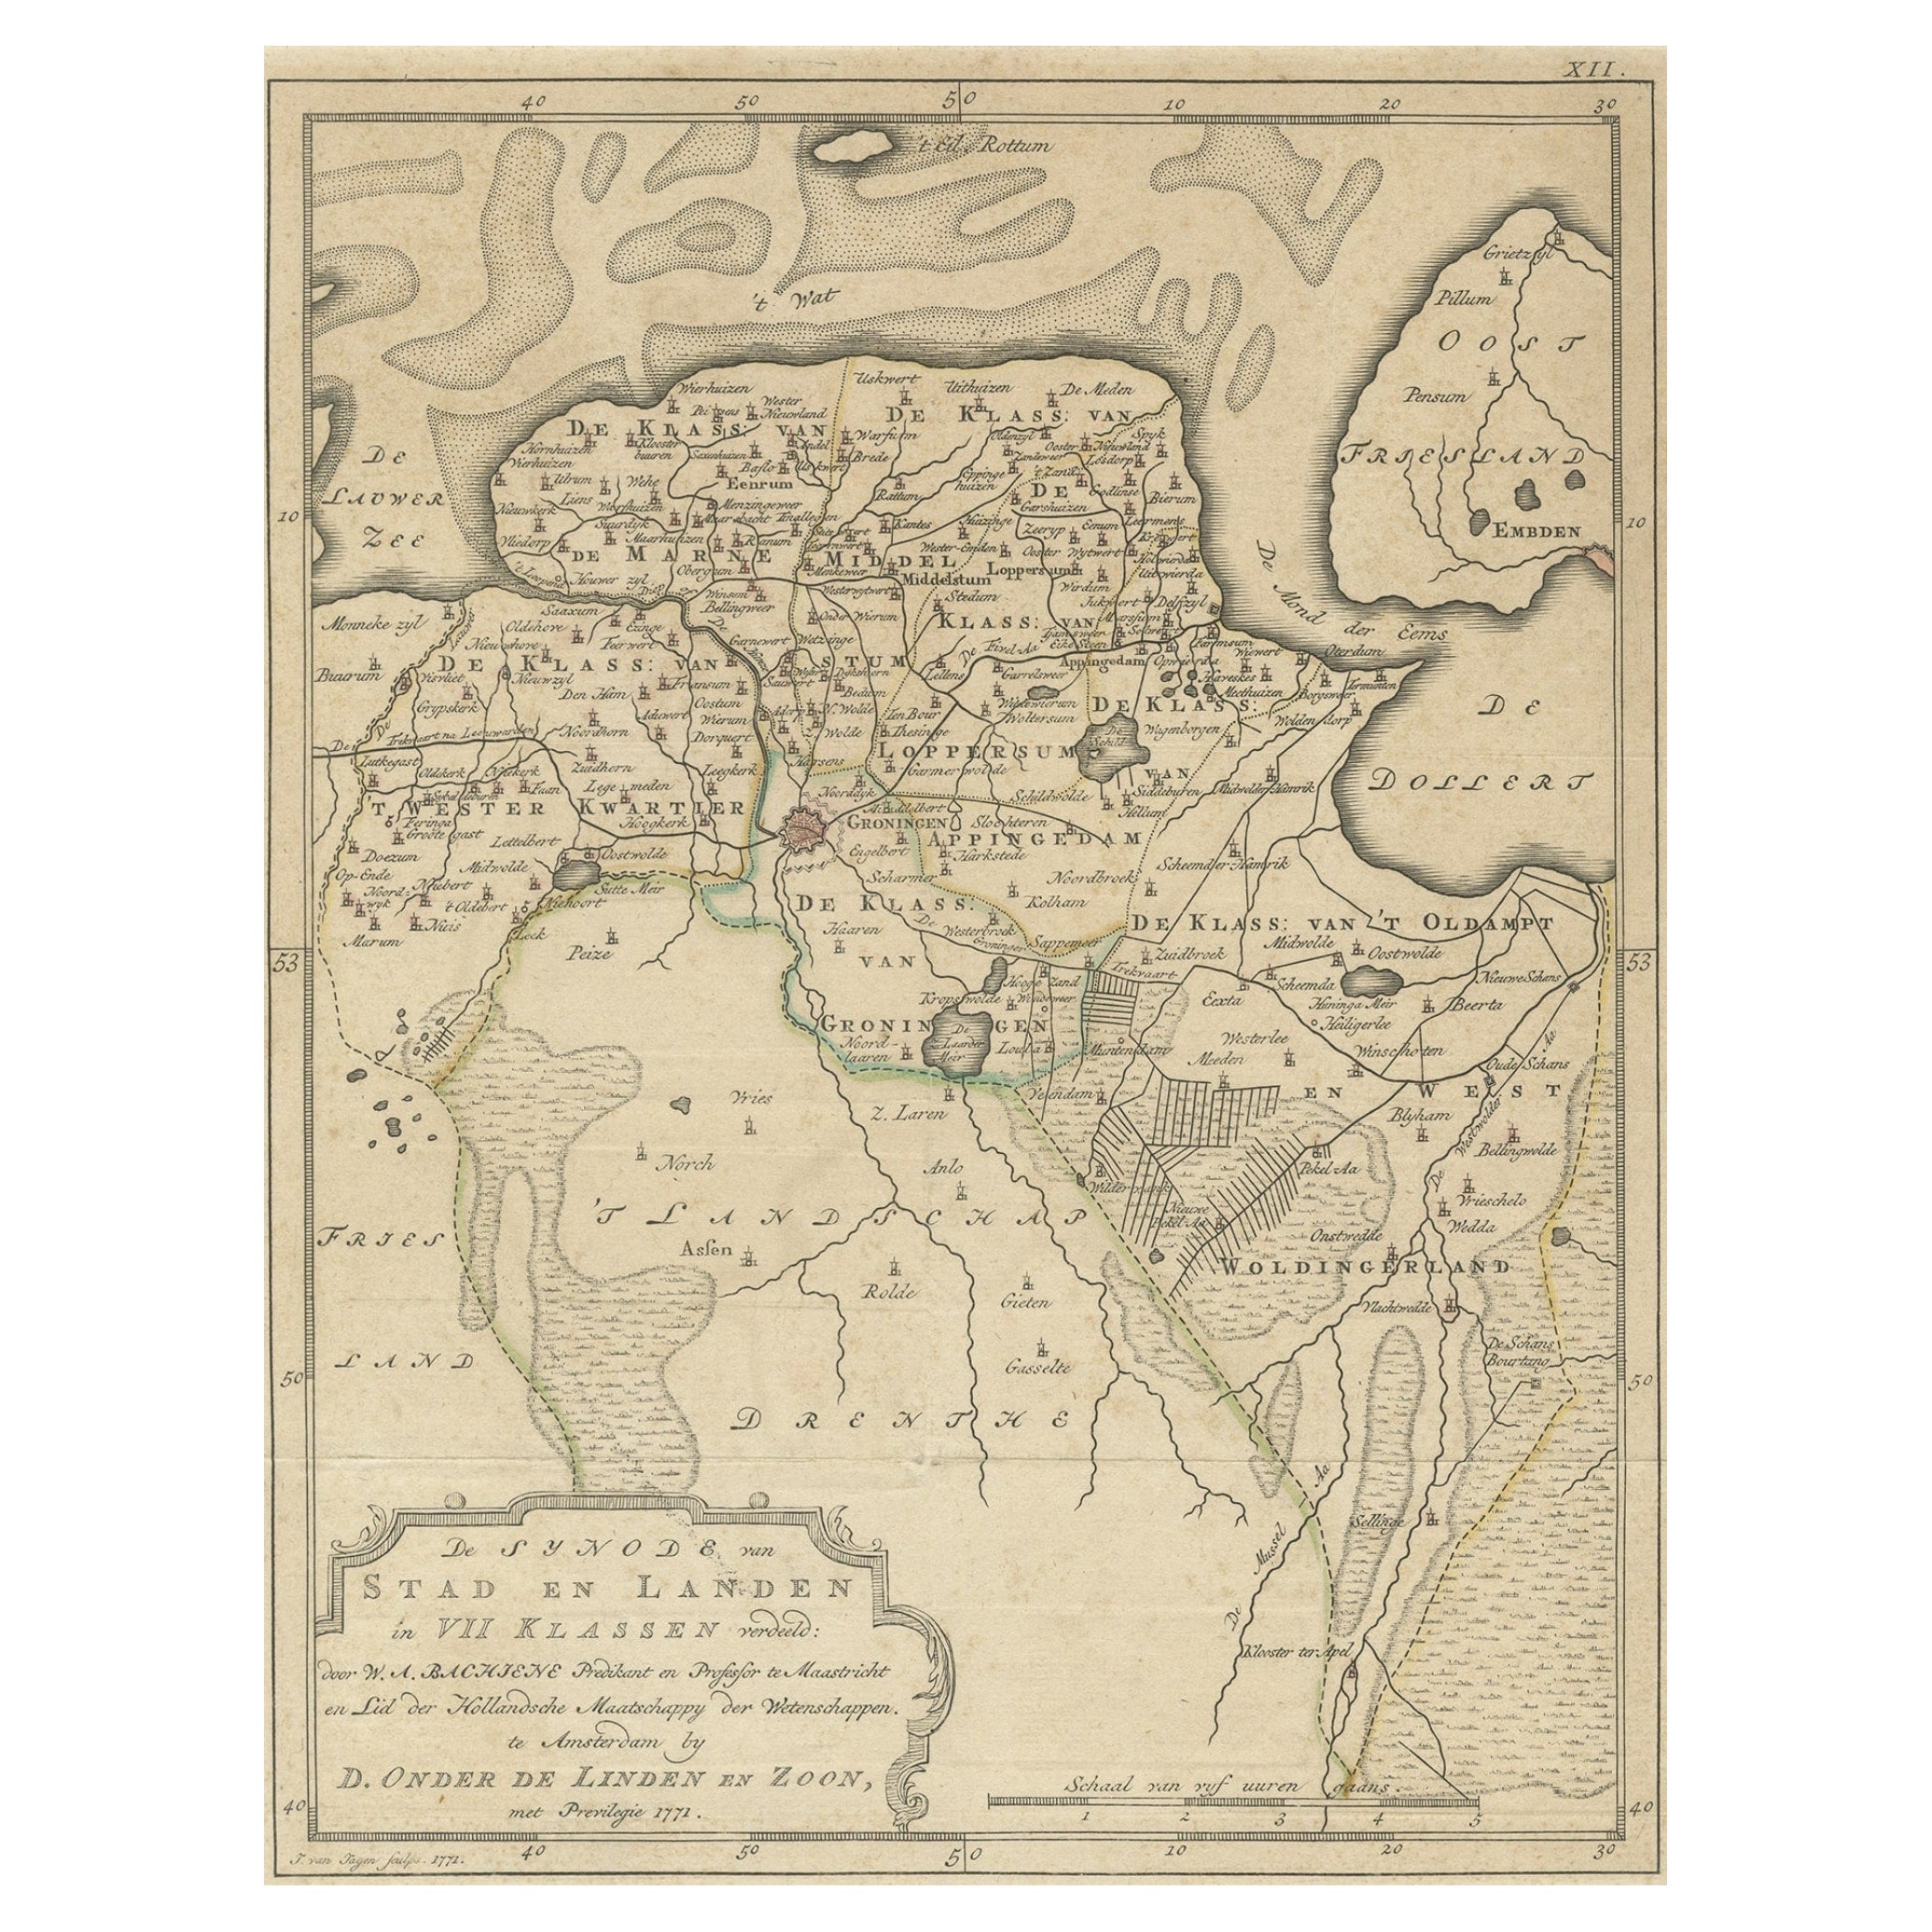 Antique Map of Groningen, the Netherlands, 1771